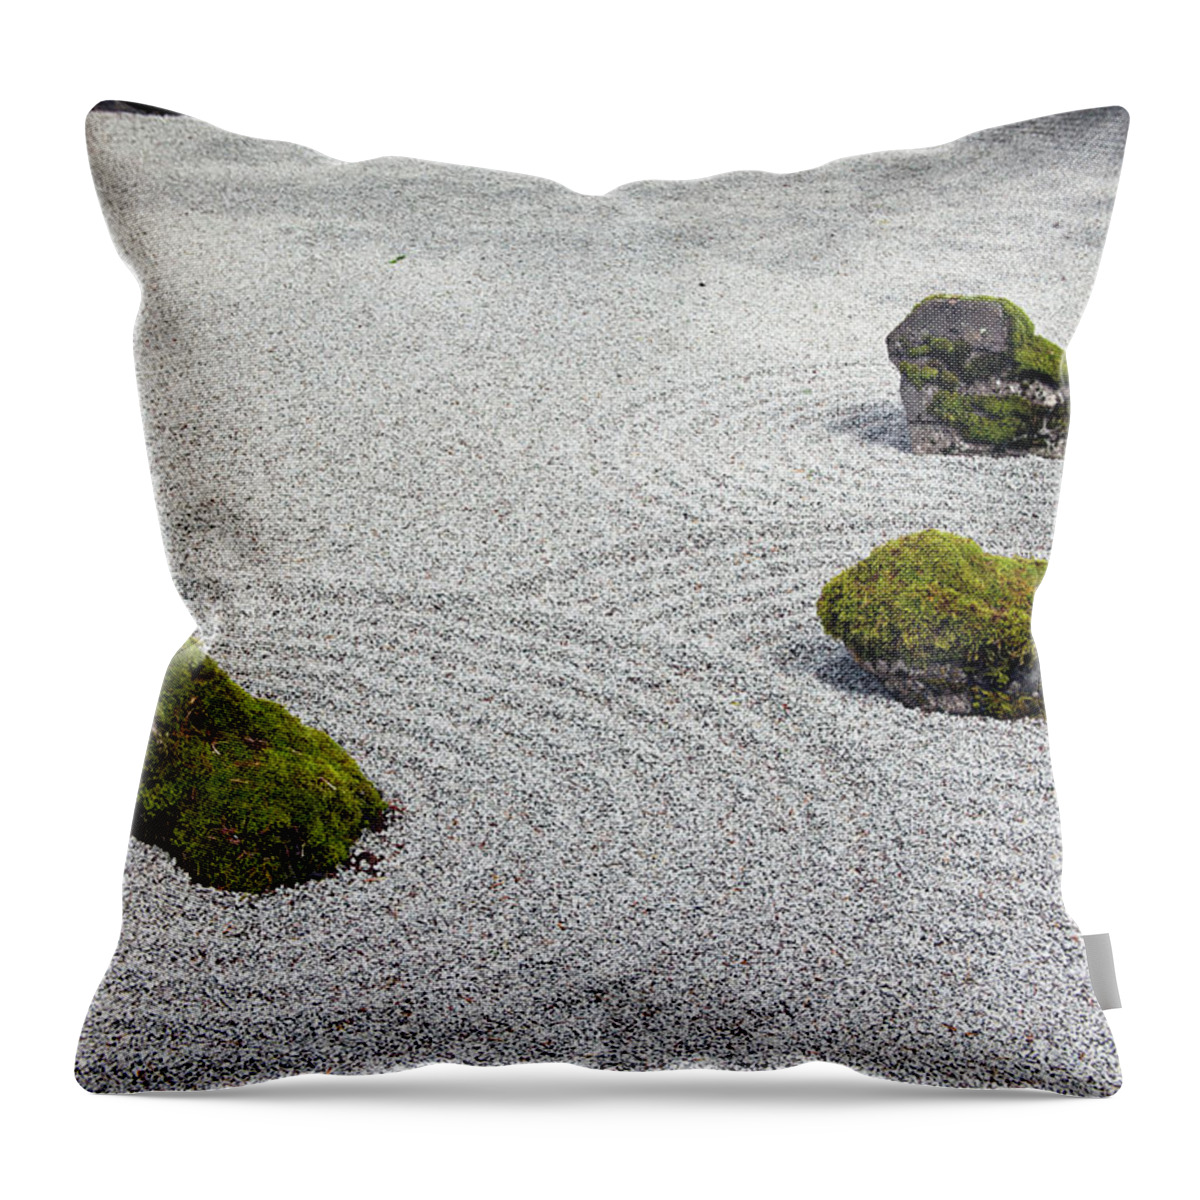 Gravel Throw Pillow featuring the photograph Three Zen Stones by Keithszafranski